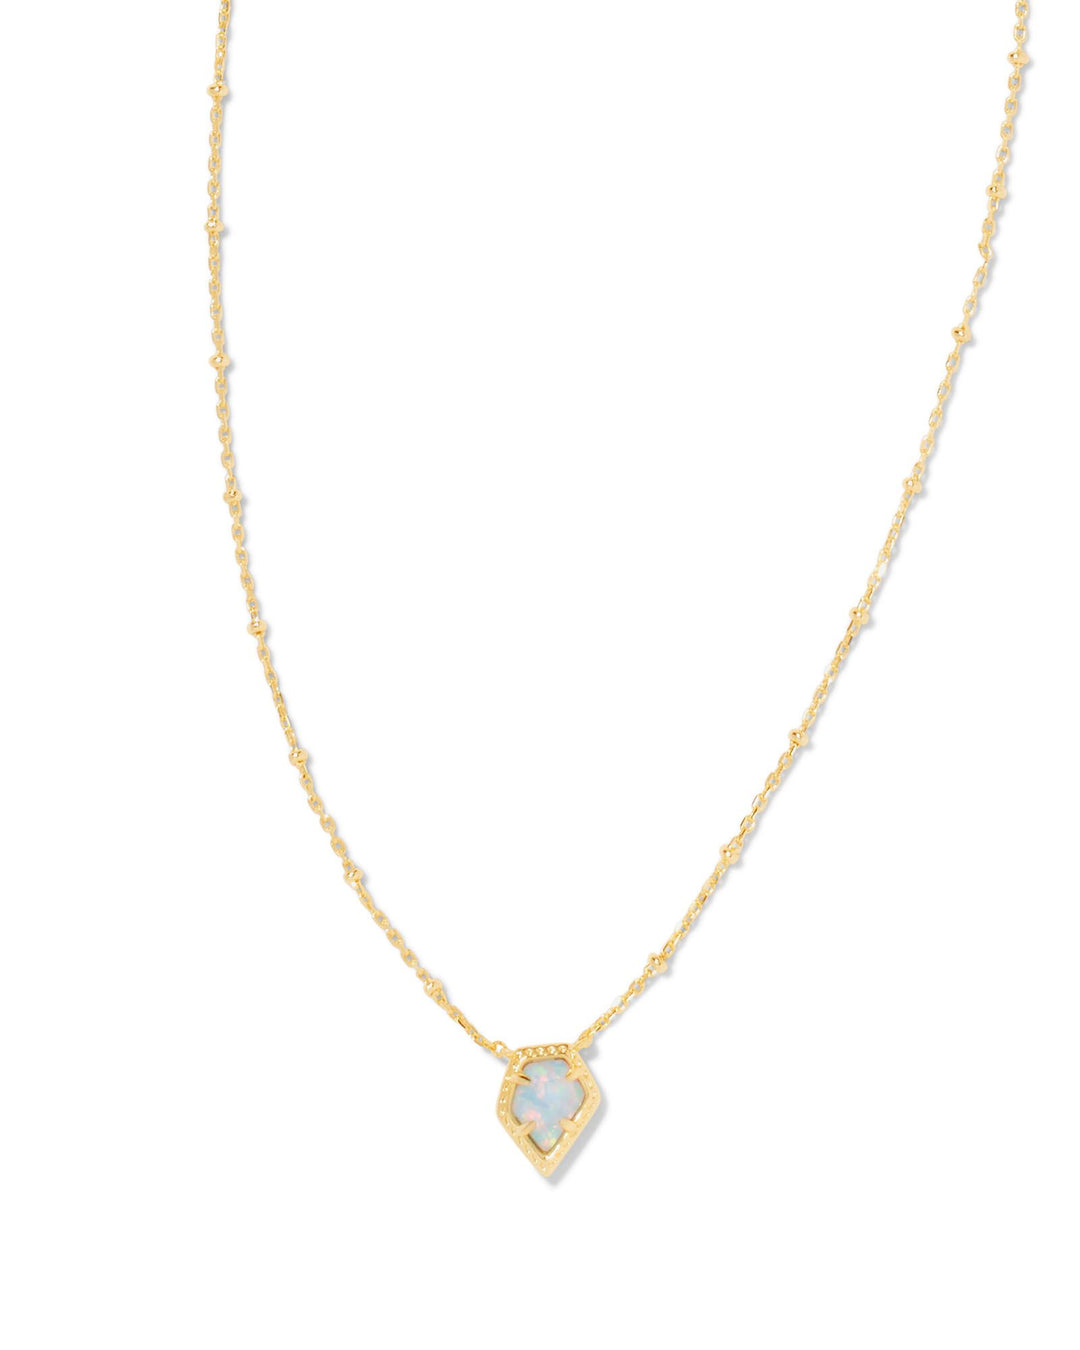 Kendra Scott Tess Satellite Pendant Necklace in Light Blue Opal